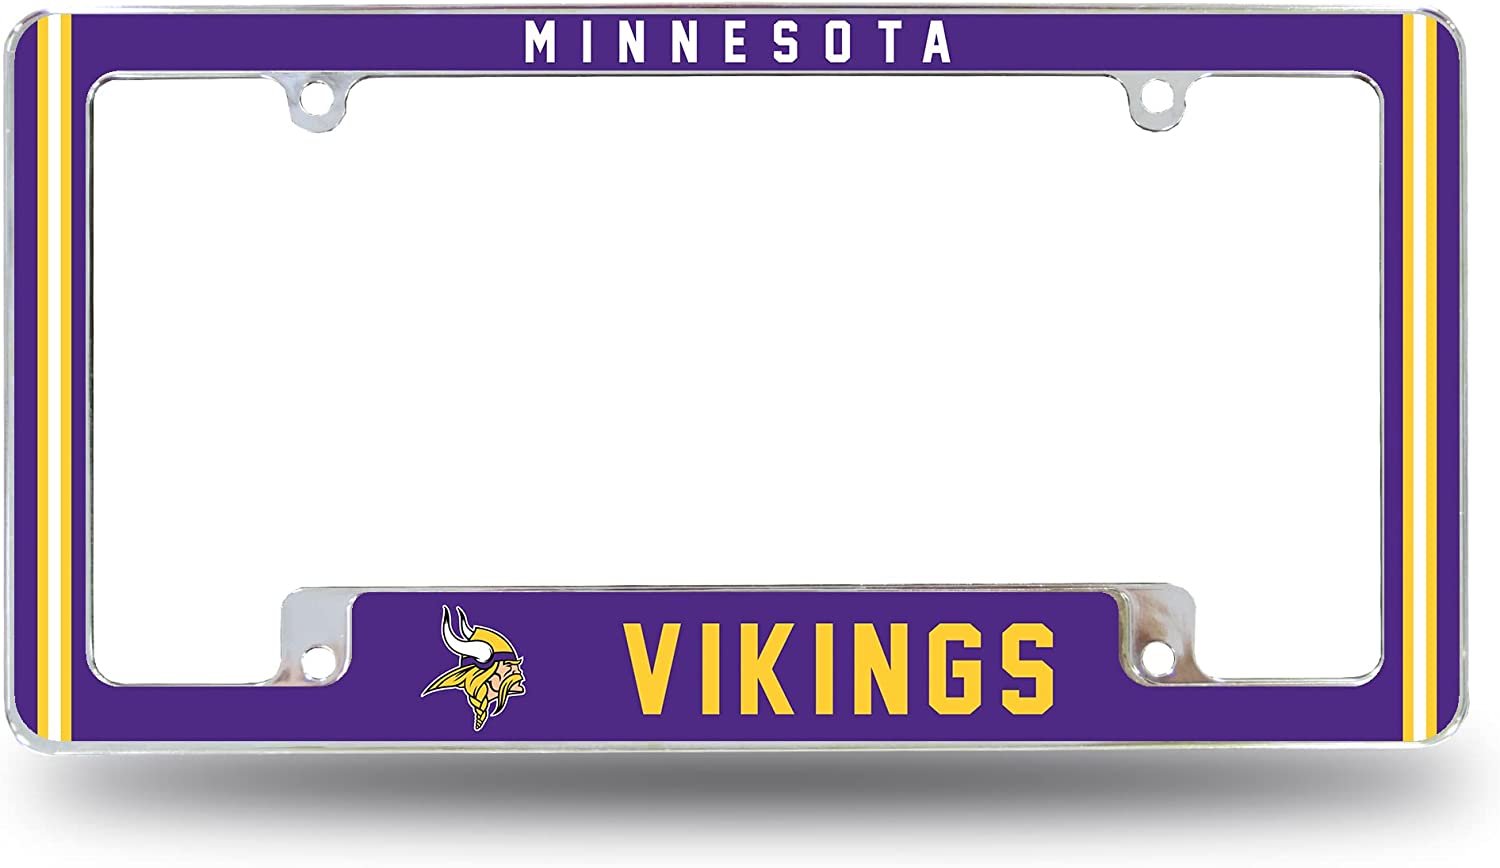 Minnesota Vikings Metal License Plate Frame Chrome Tag Cover Alternate Design 6x12 Inch